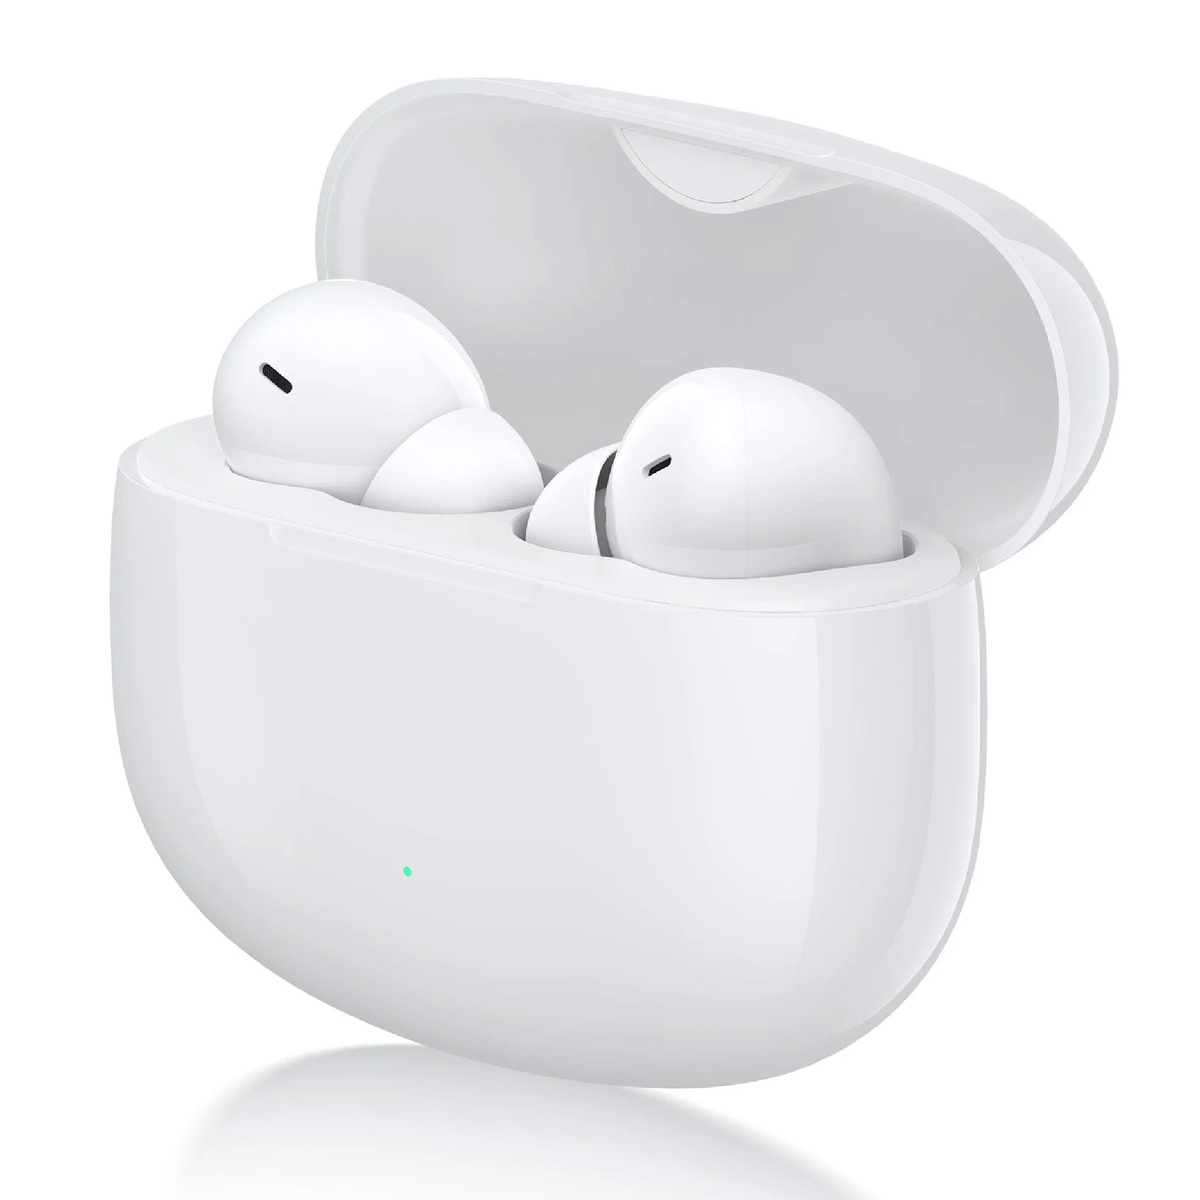 Honor Choice Earbuds X5 True Wireless Earphone Bluetooth 5.3